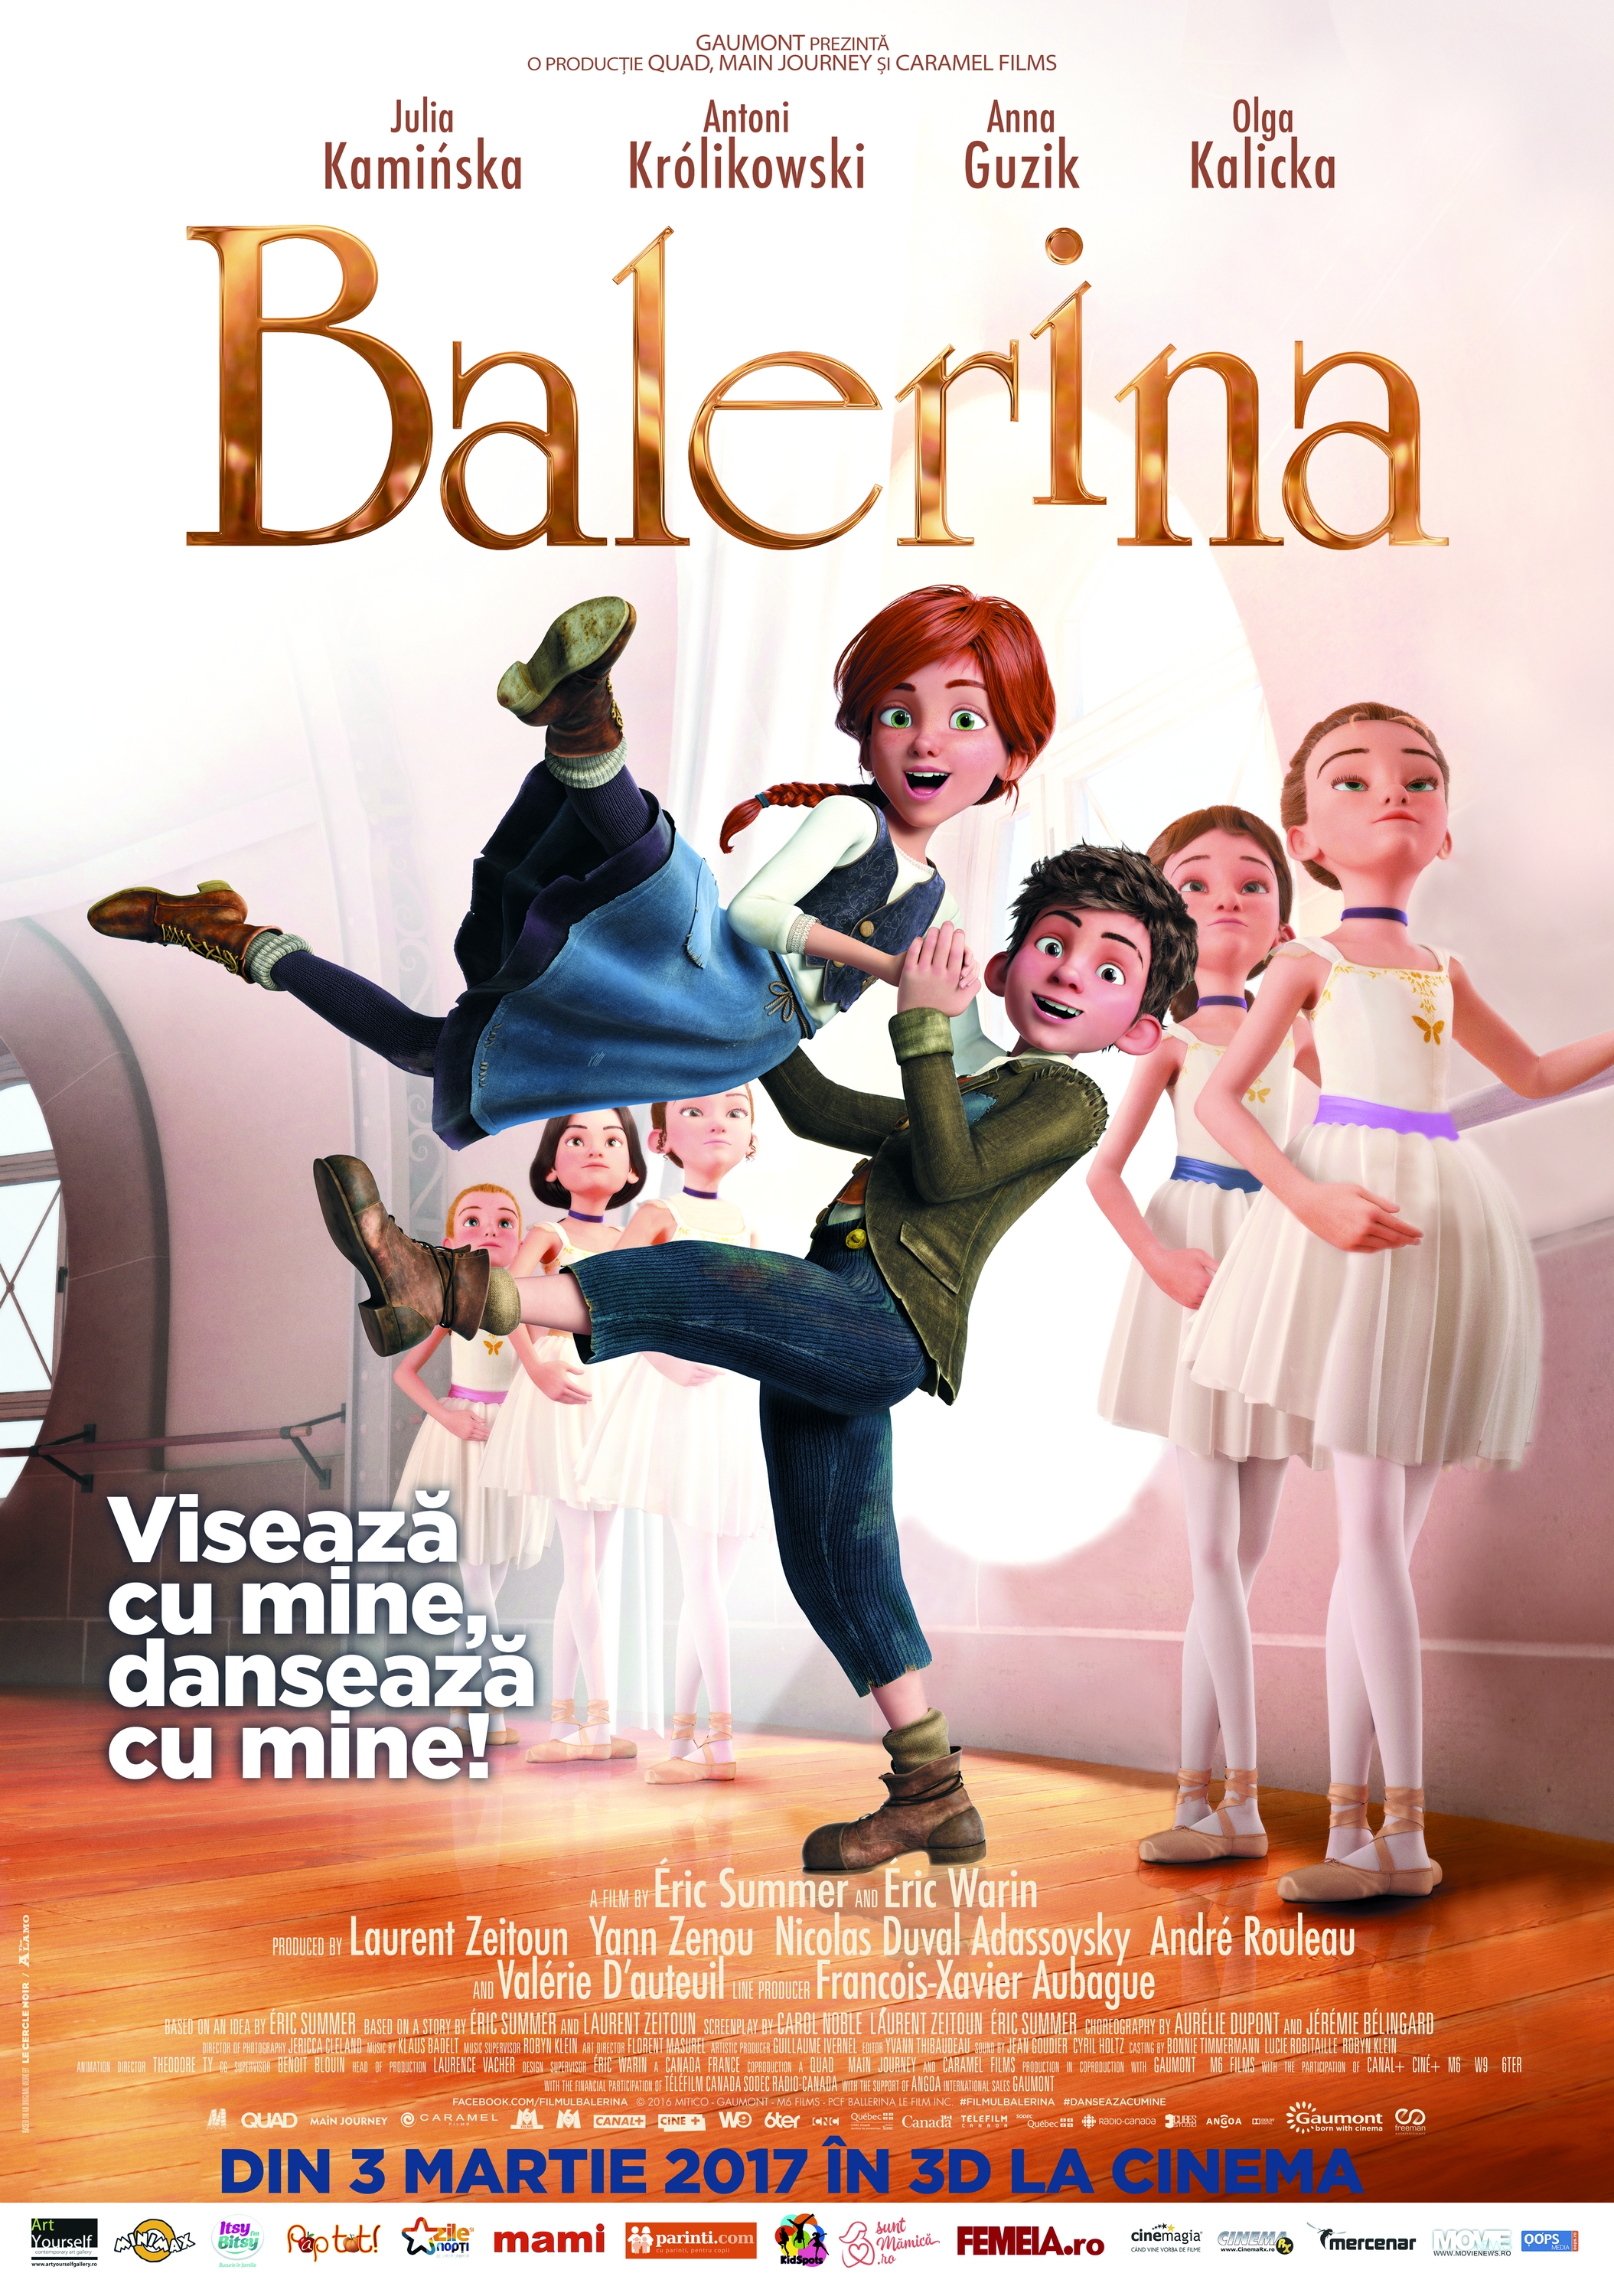 pasta definite logo Ballerina - Balerina (2016) - Film - CineMagia.ro